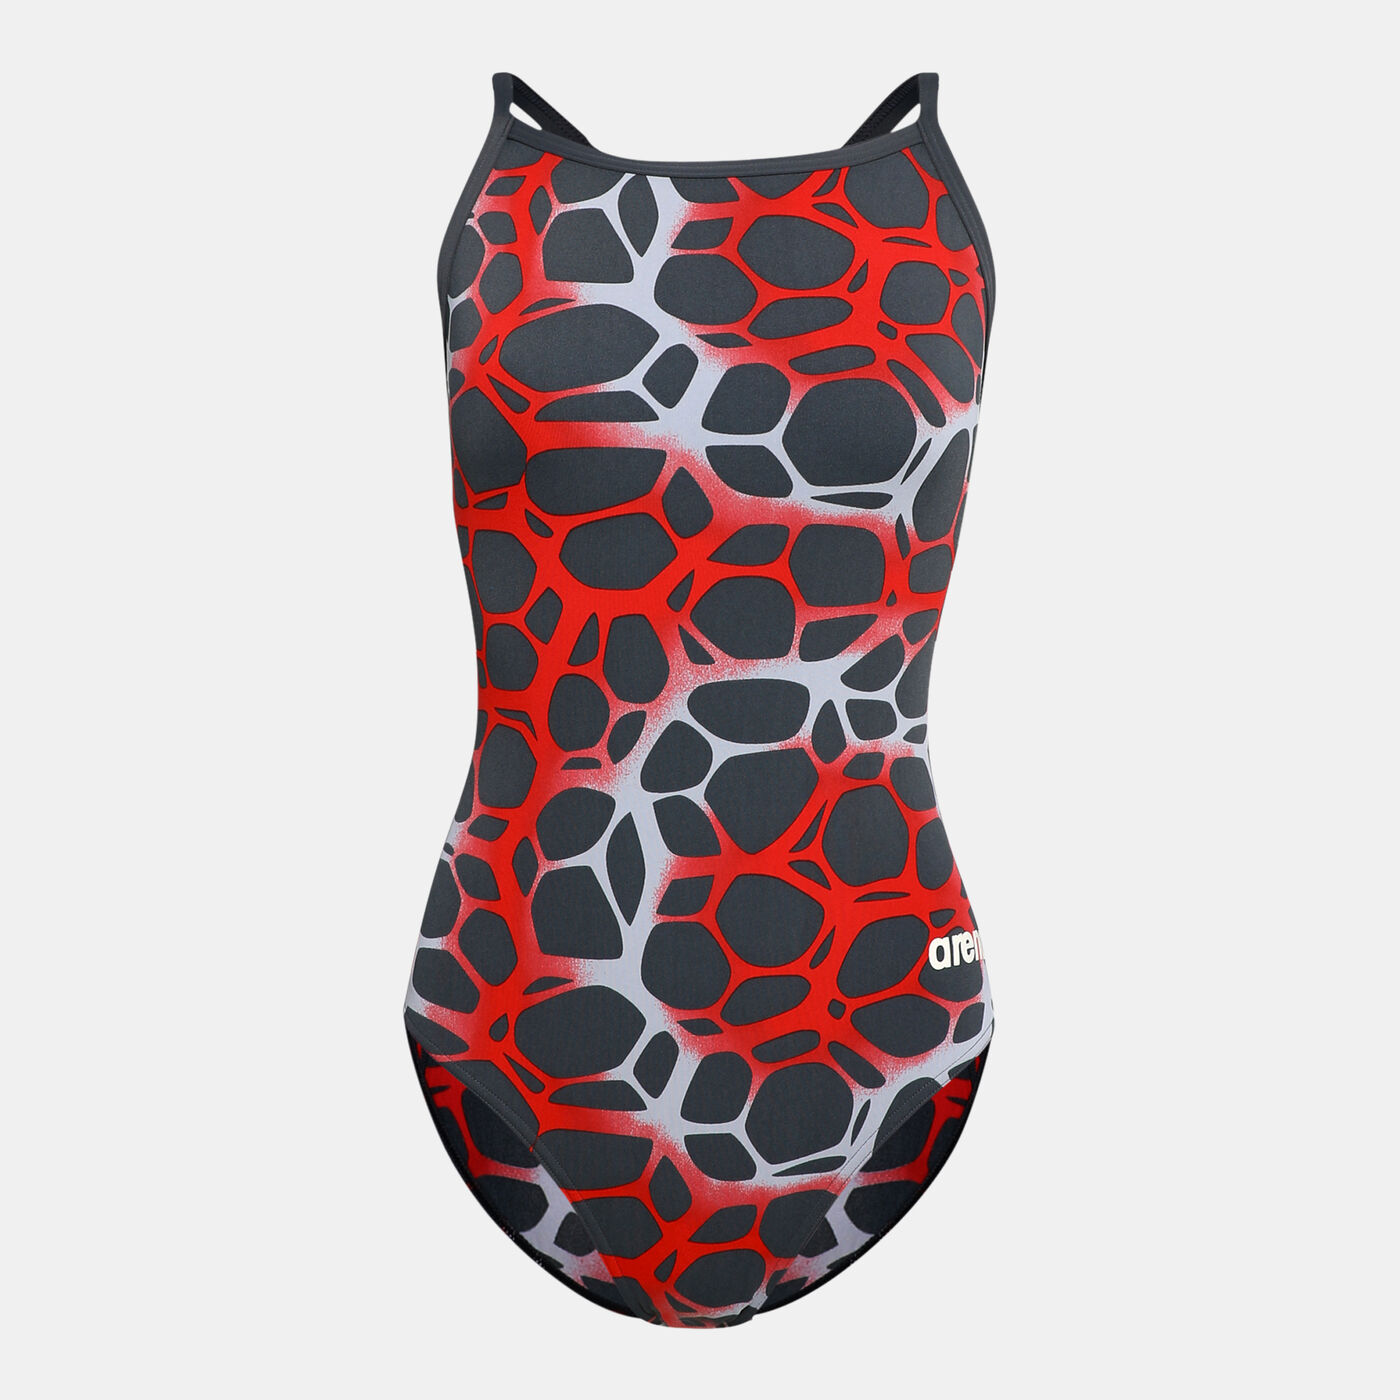 Women's Polycarbonite One-Piece Swimsuit